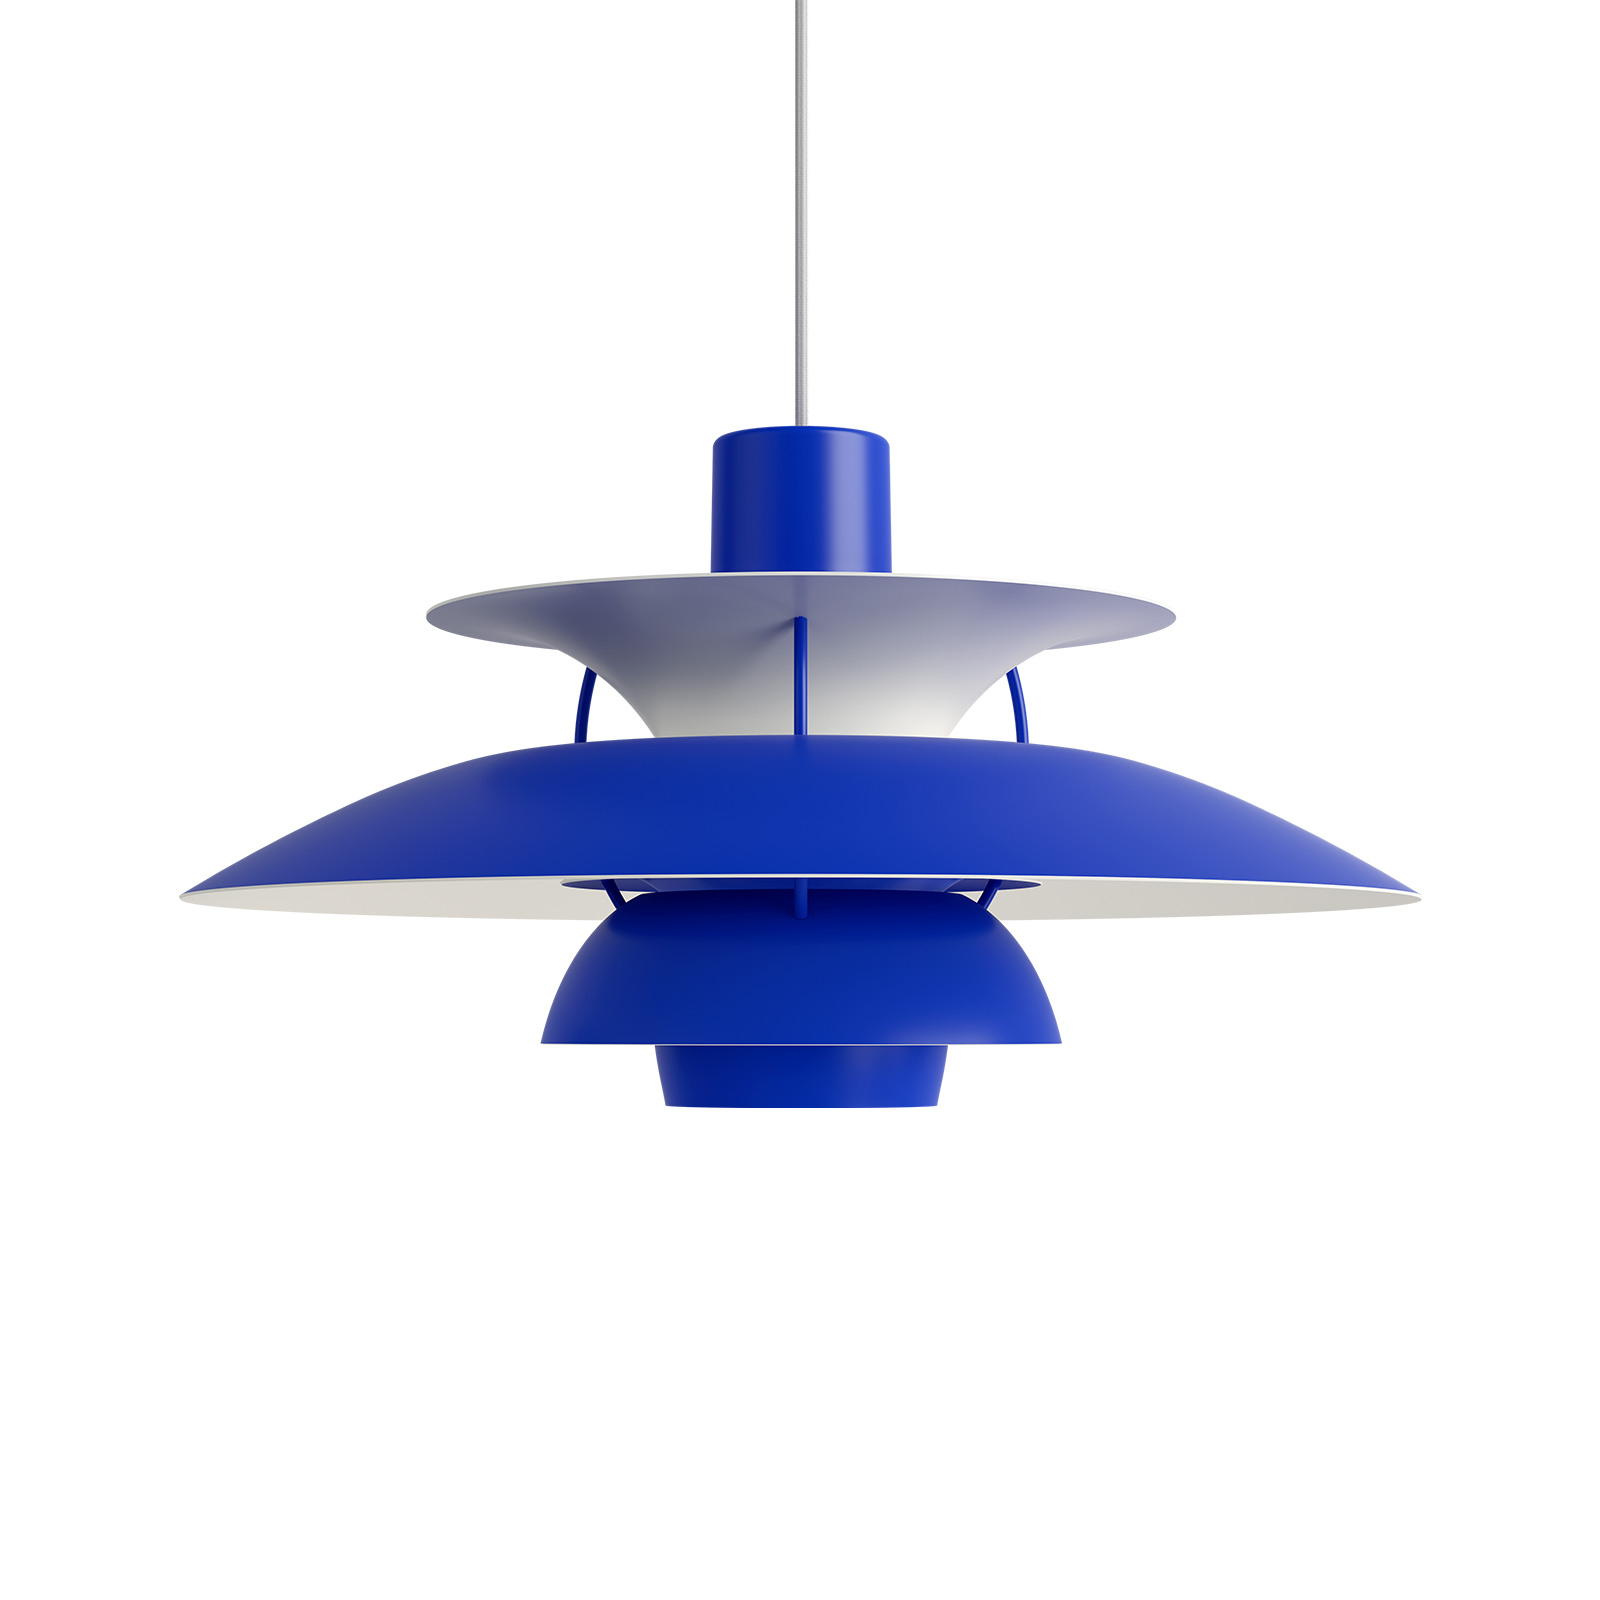 Louis Poulsen PH 5 hanglamp monochroom blauw